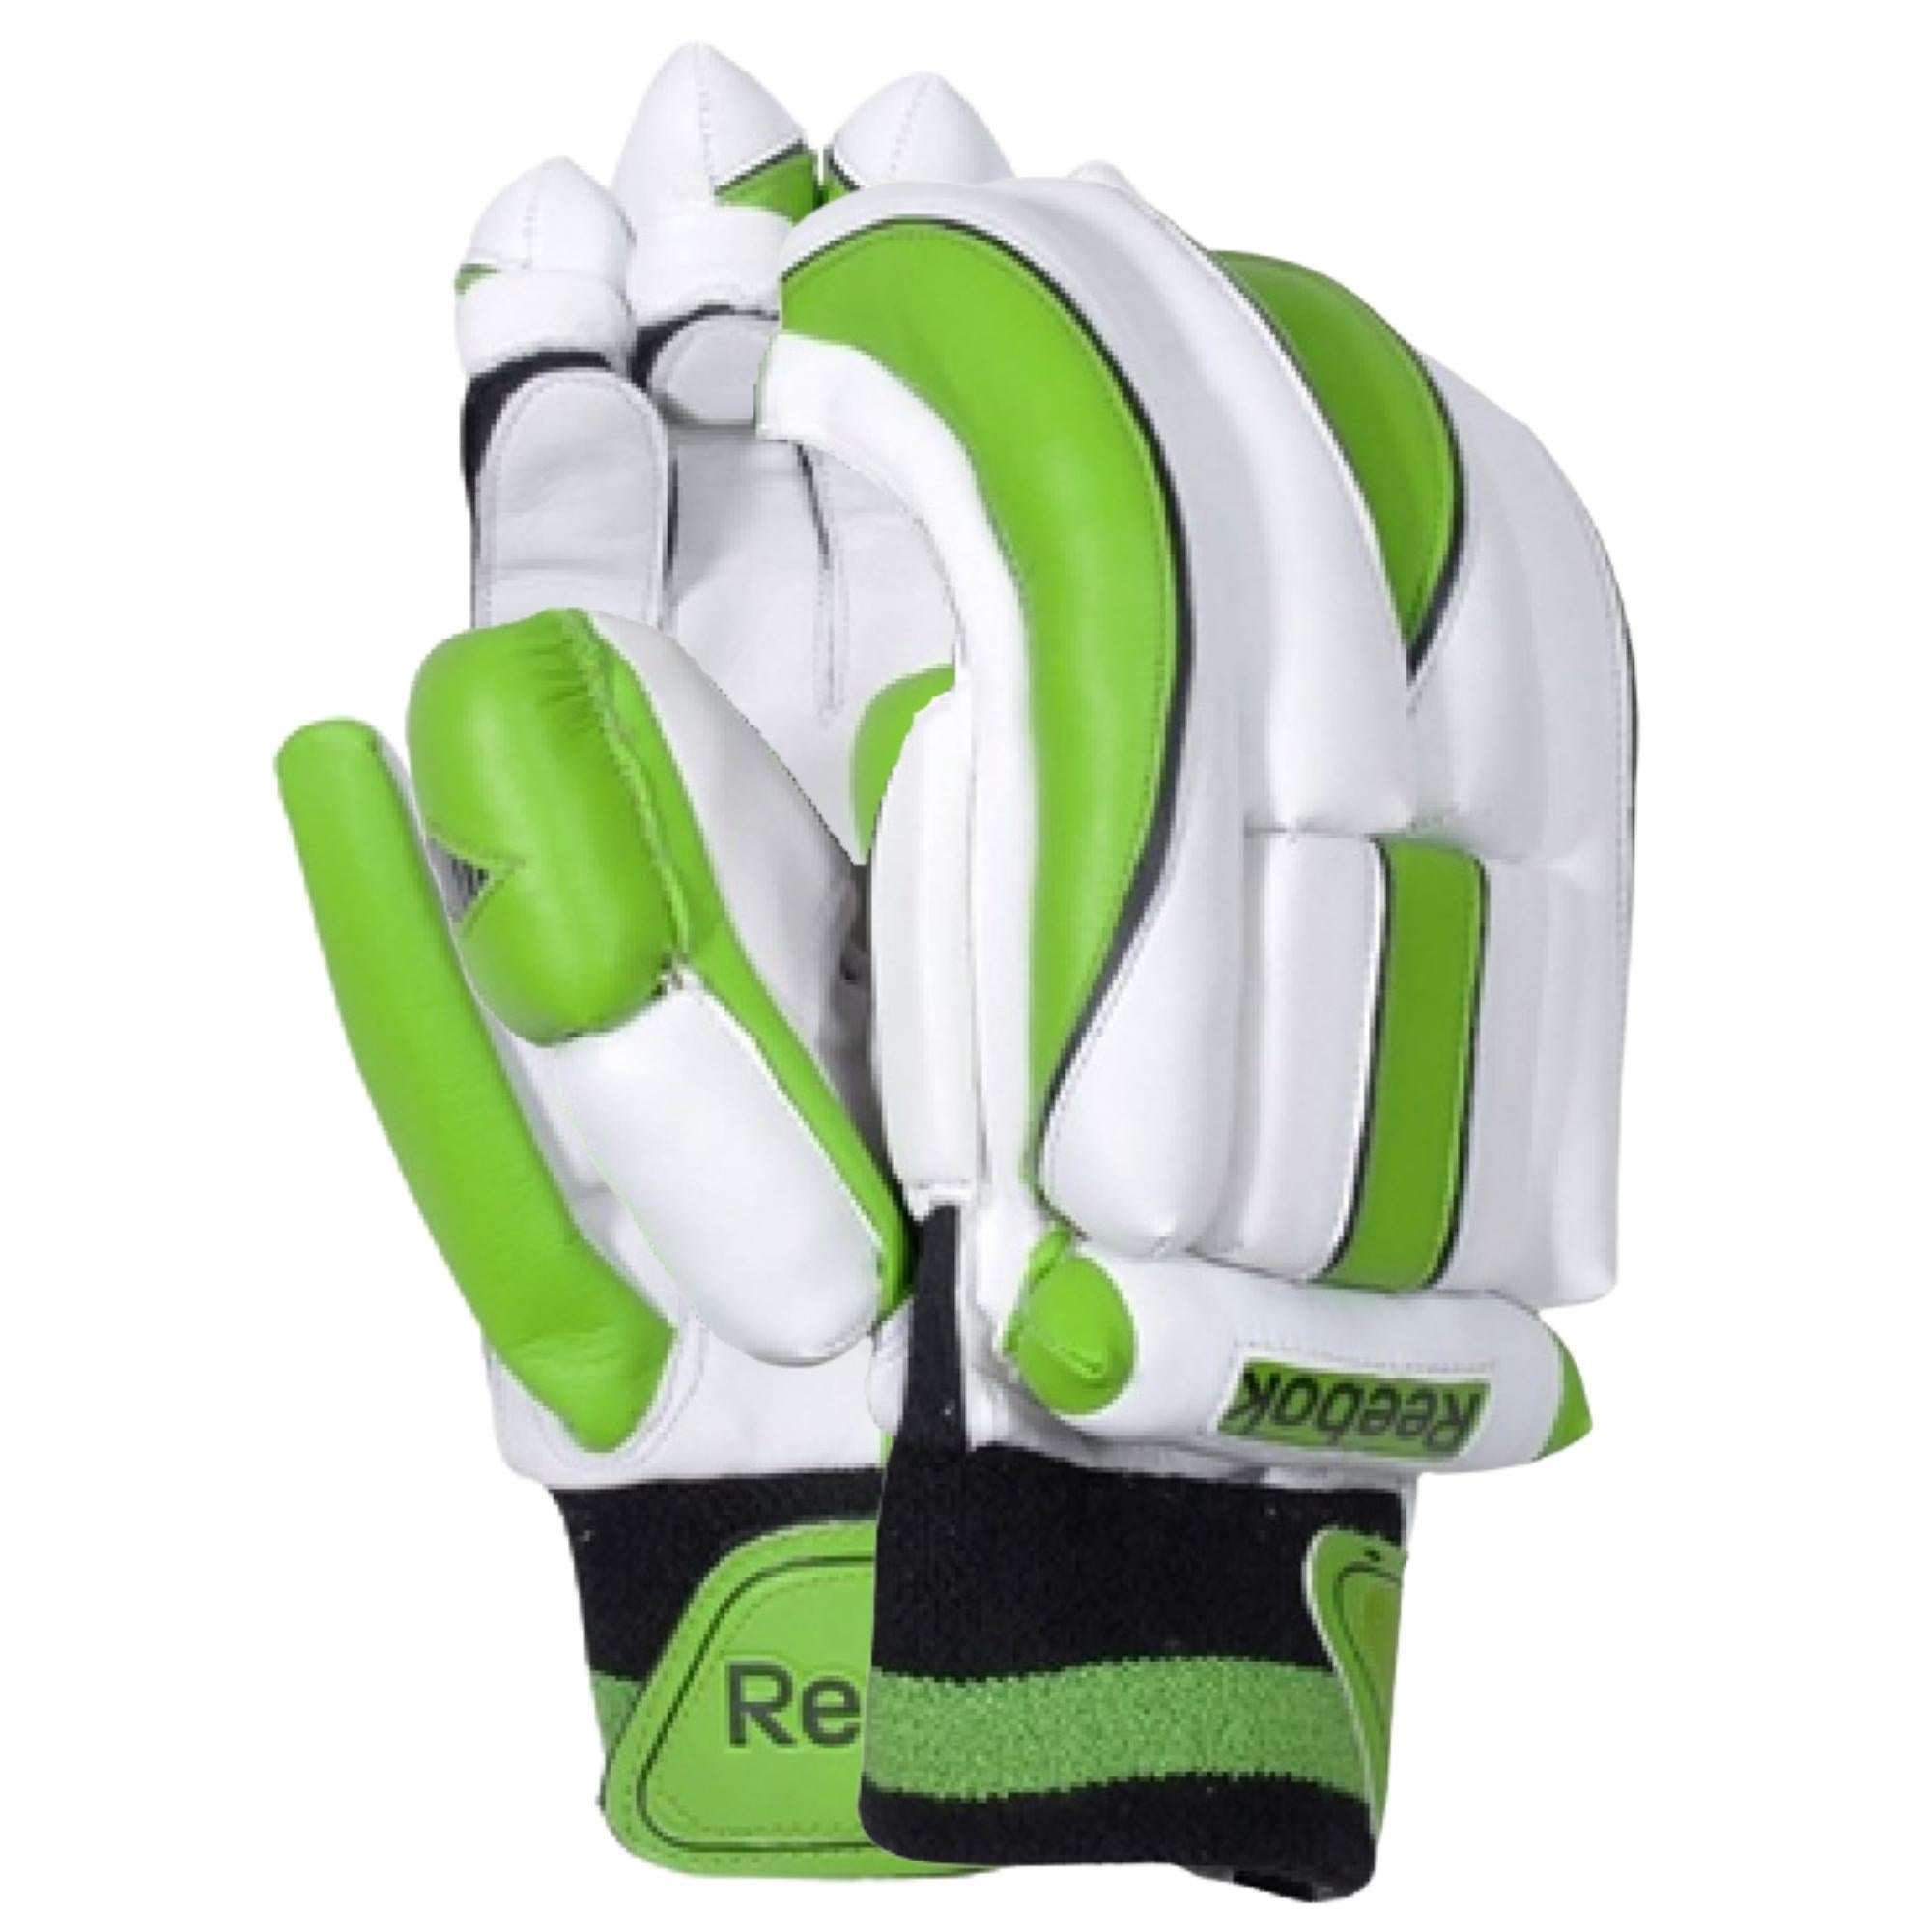 Reebok Cricket Batting Gloves Centurion Pro